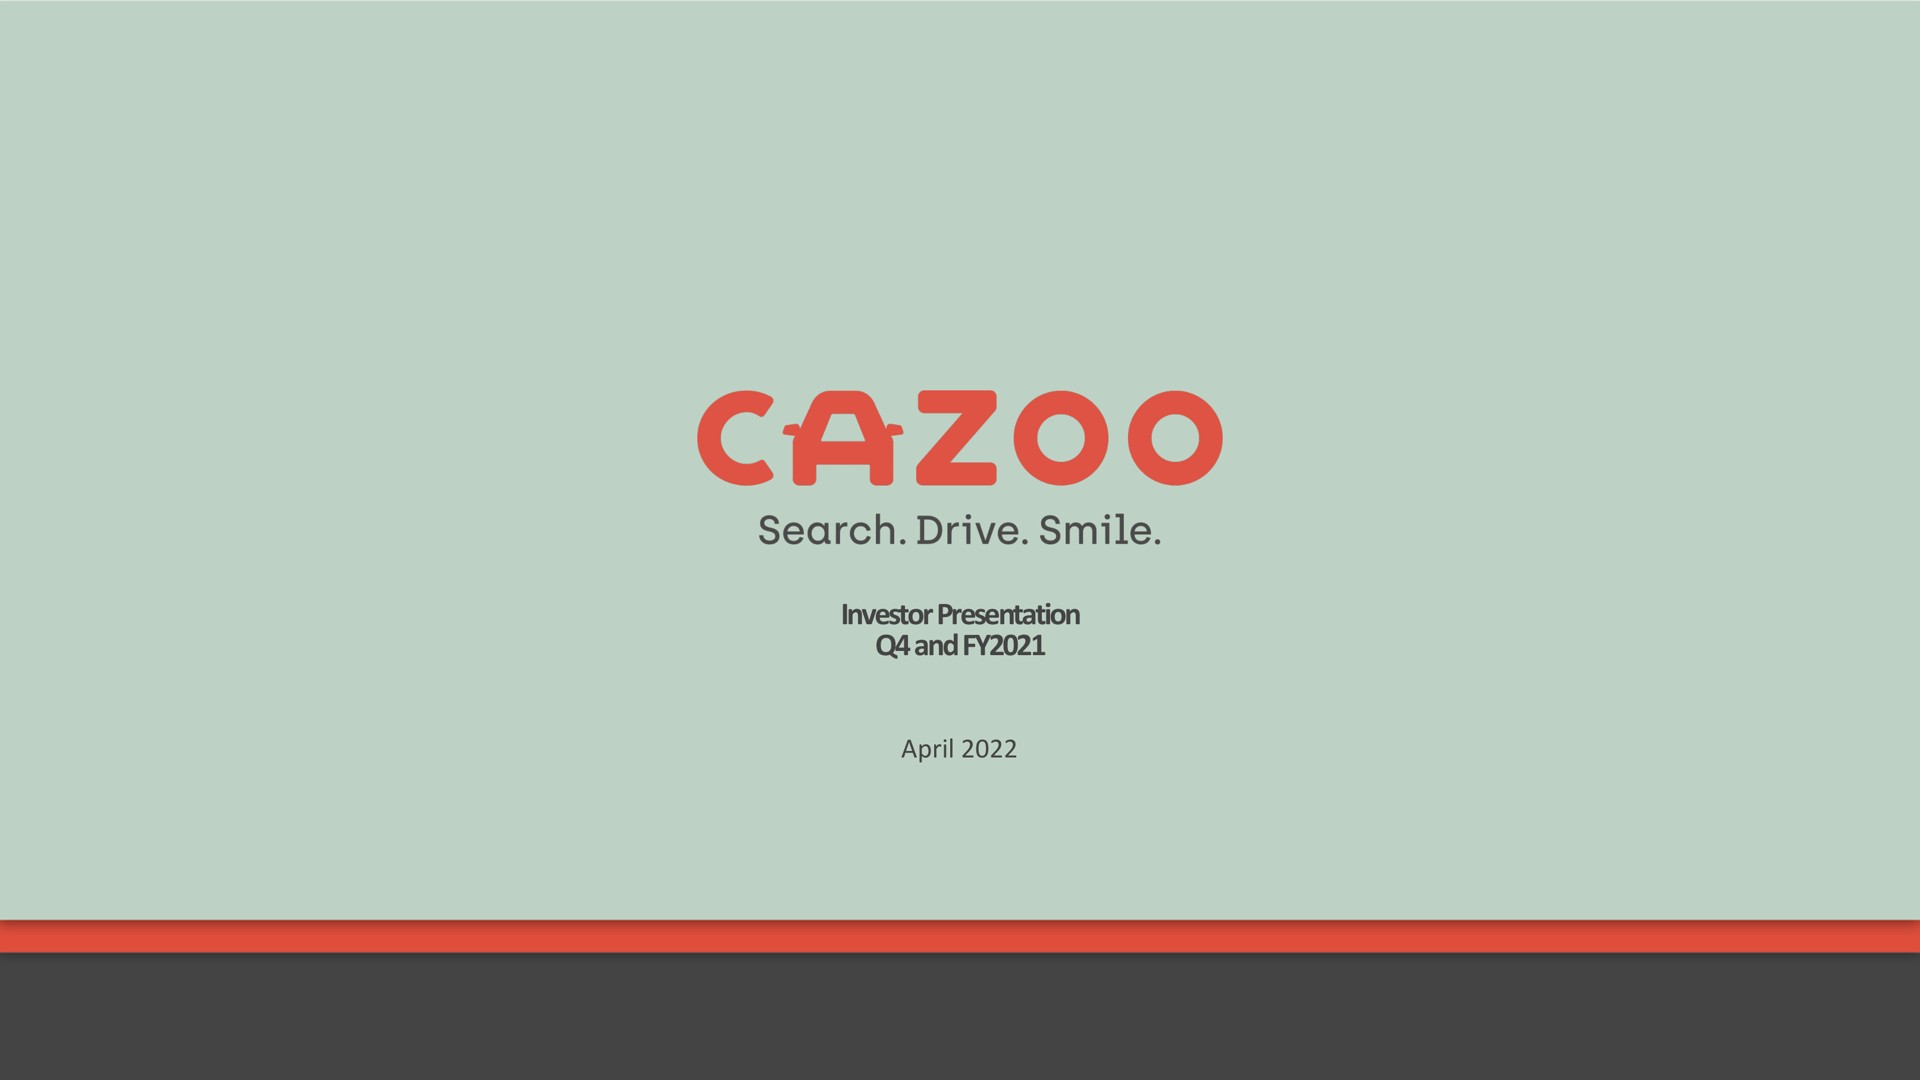 search drive smile | Cazoo